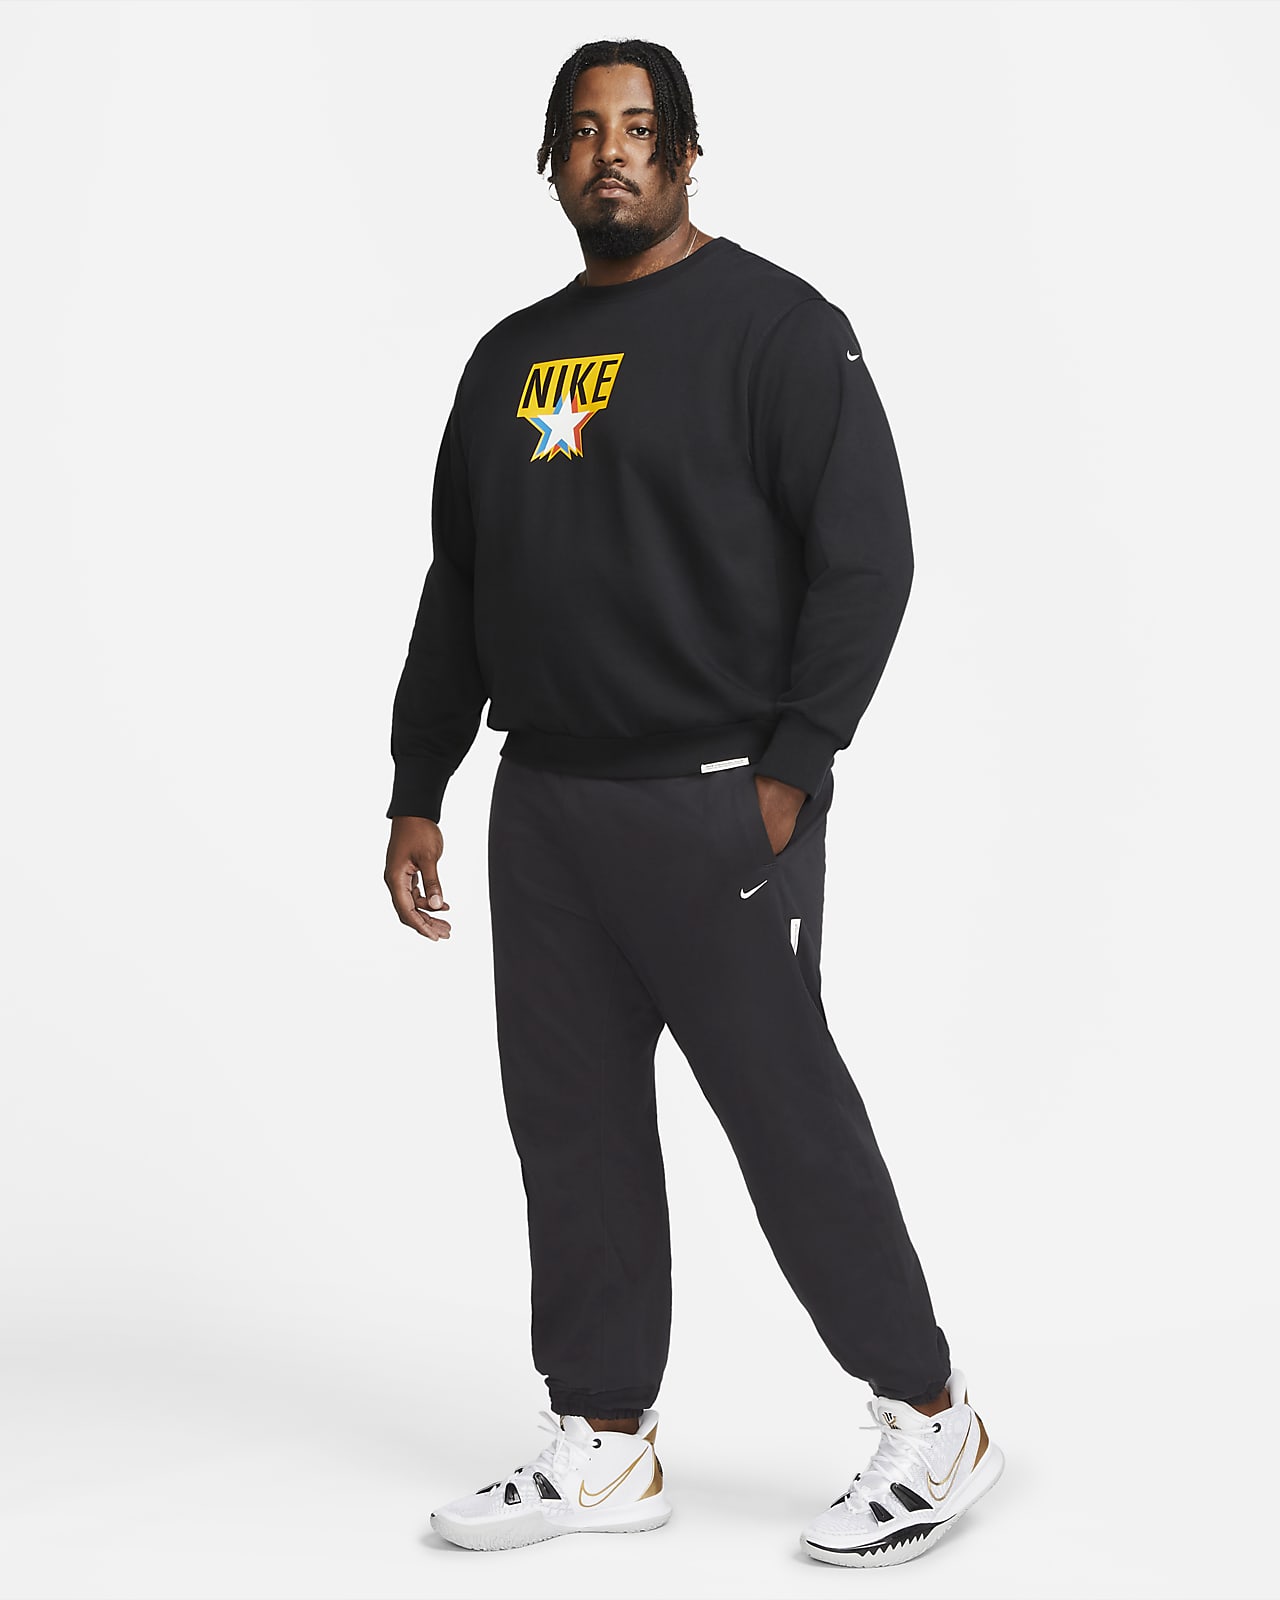 Nike Dri-FIT Standard Issue Men's Basketball Pants. Nike.com